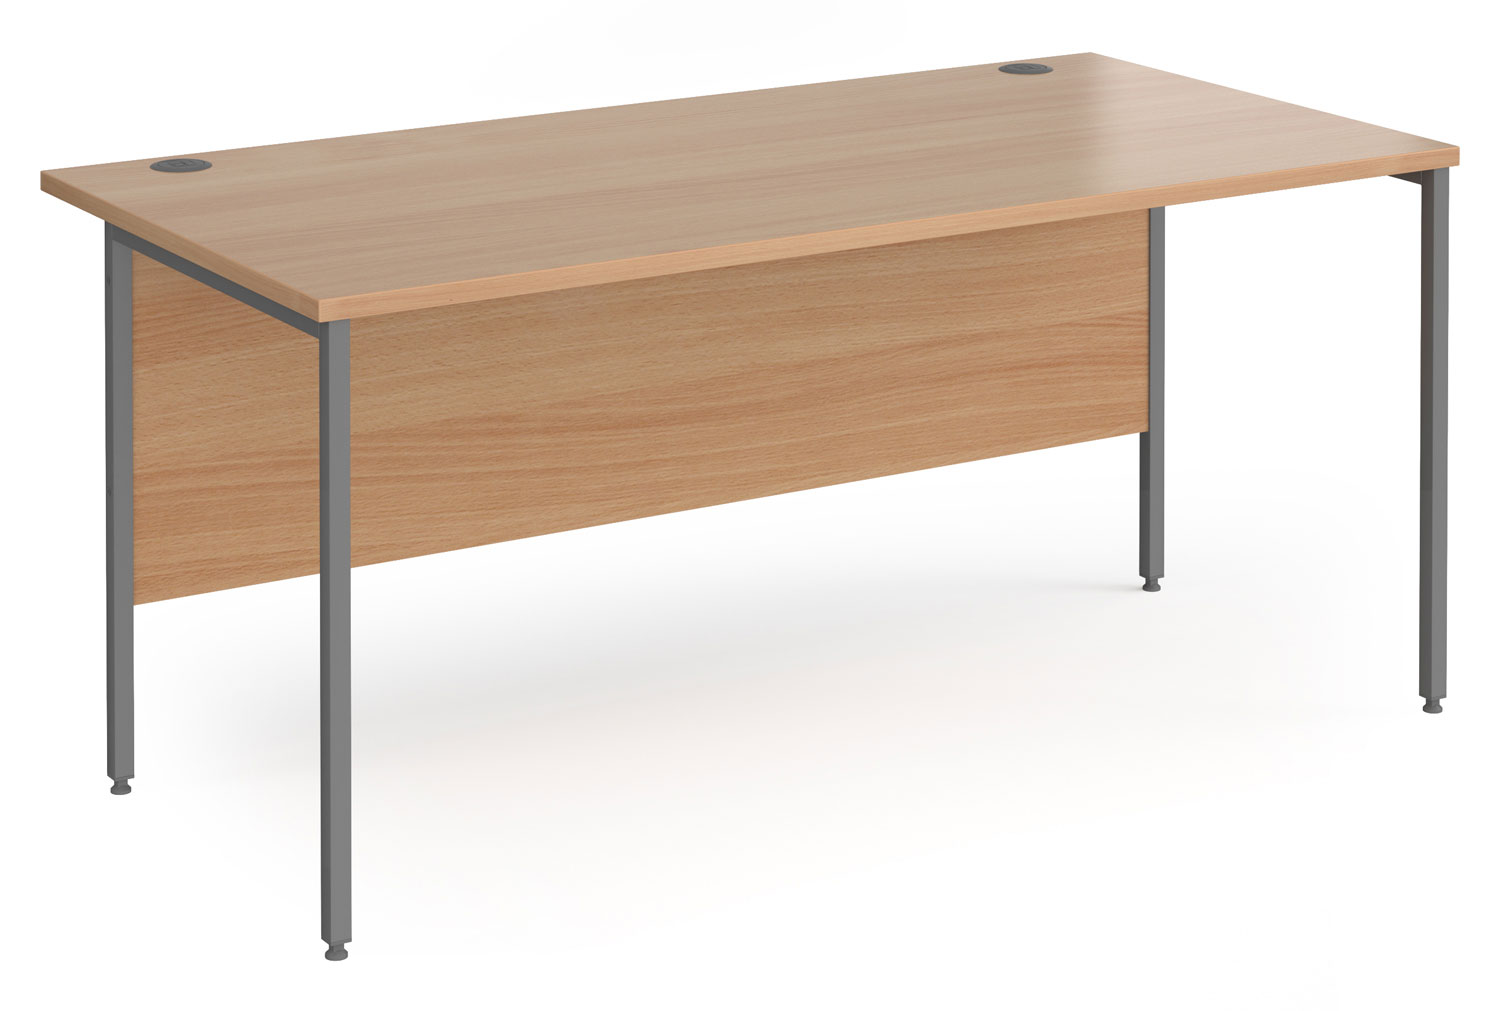 Value Line Classic+ Rectangular H-Leg Office Desk (Graphite Leg), 160wx80dx73h (cm), Beech